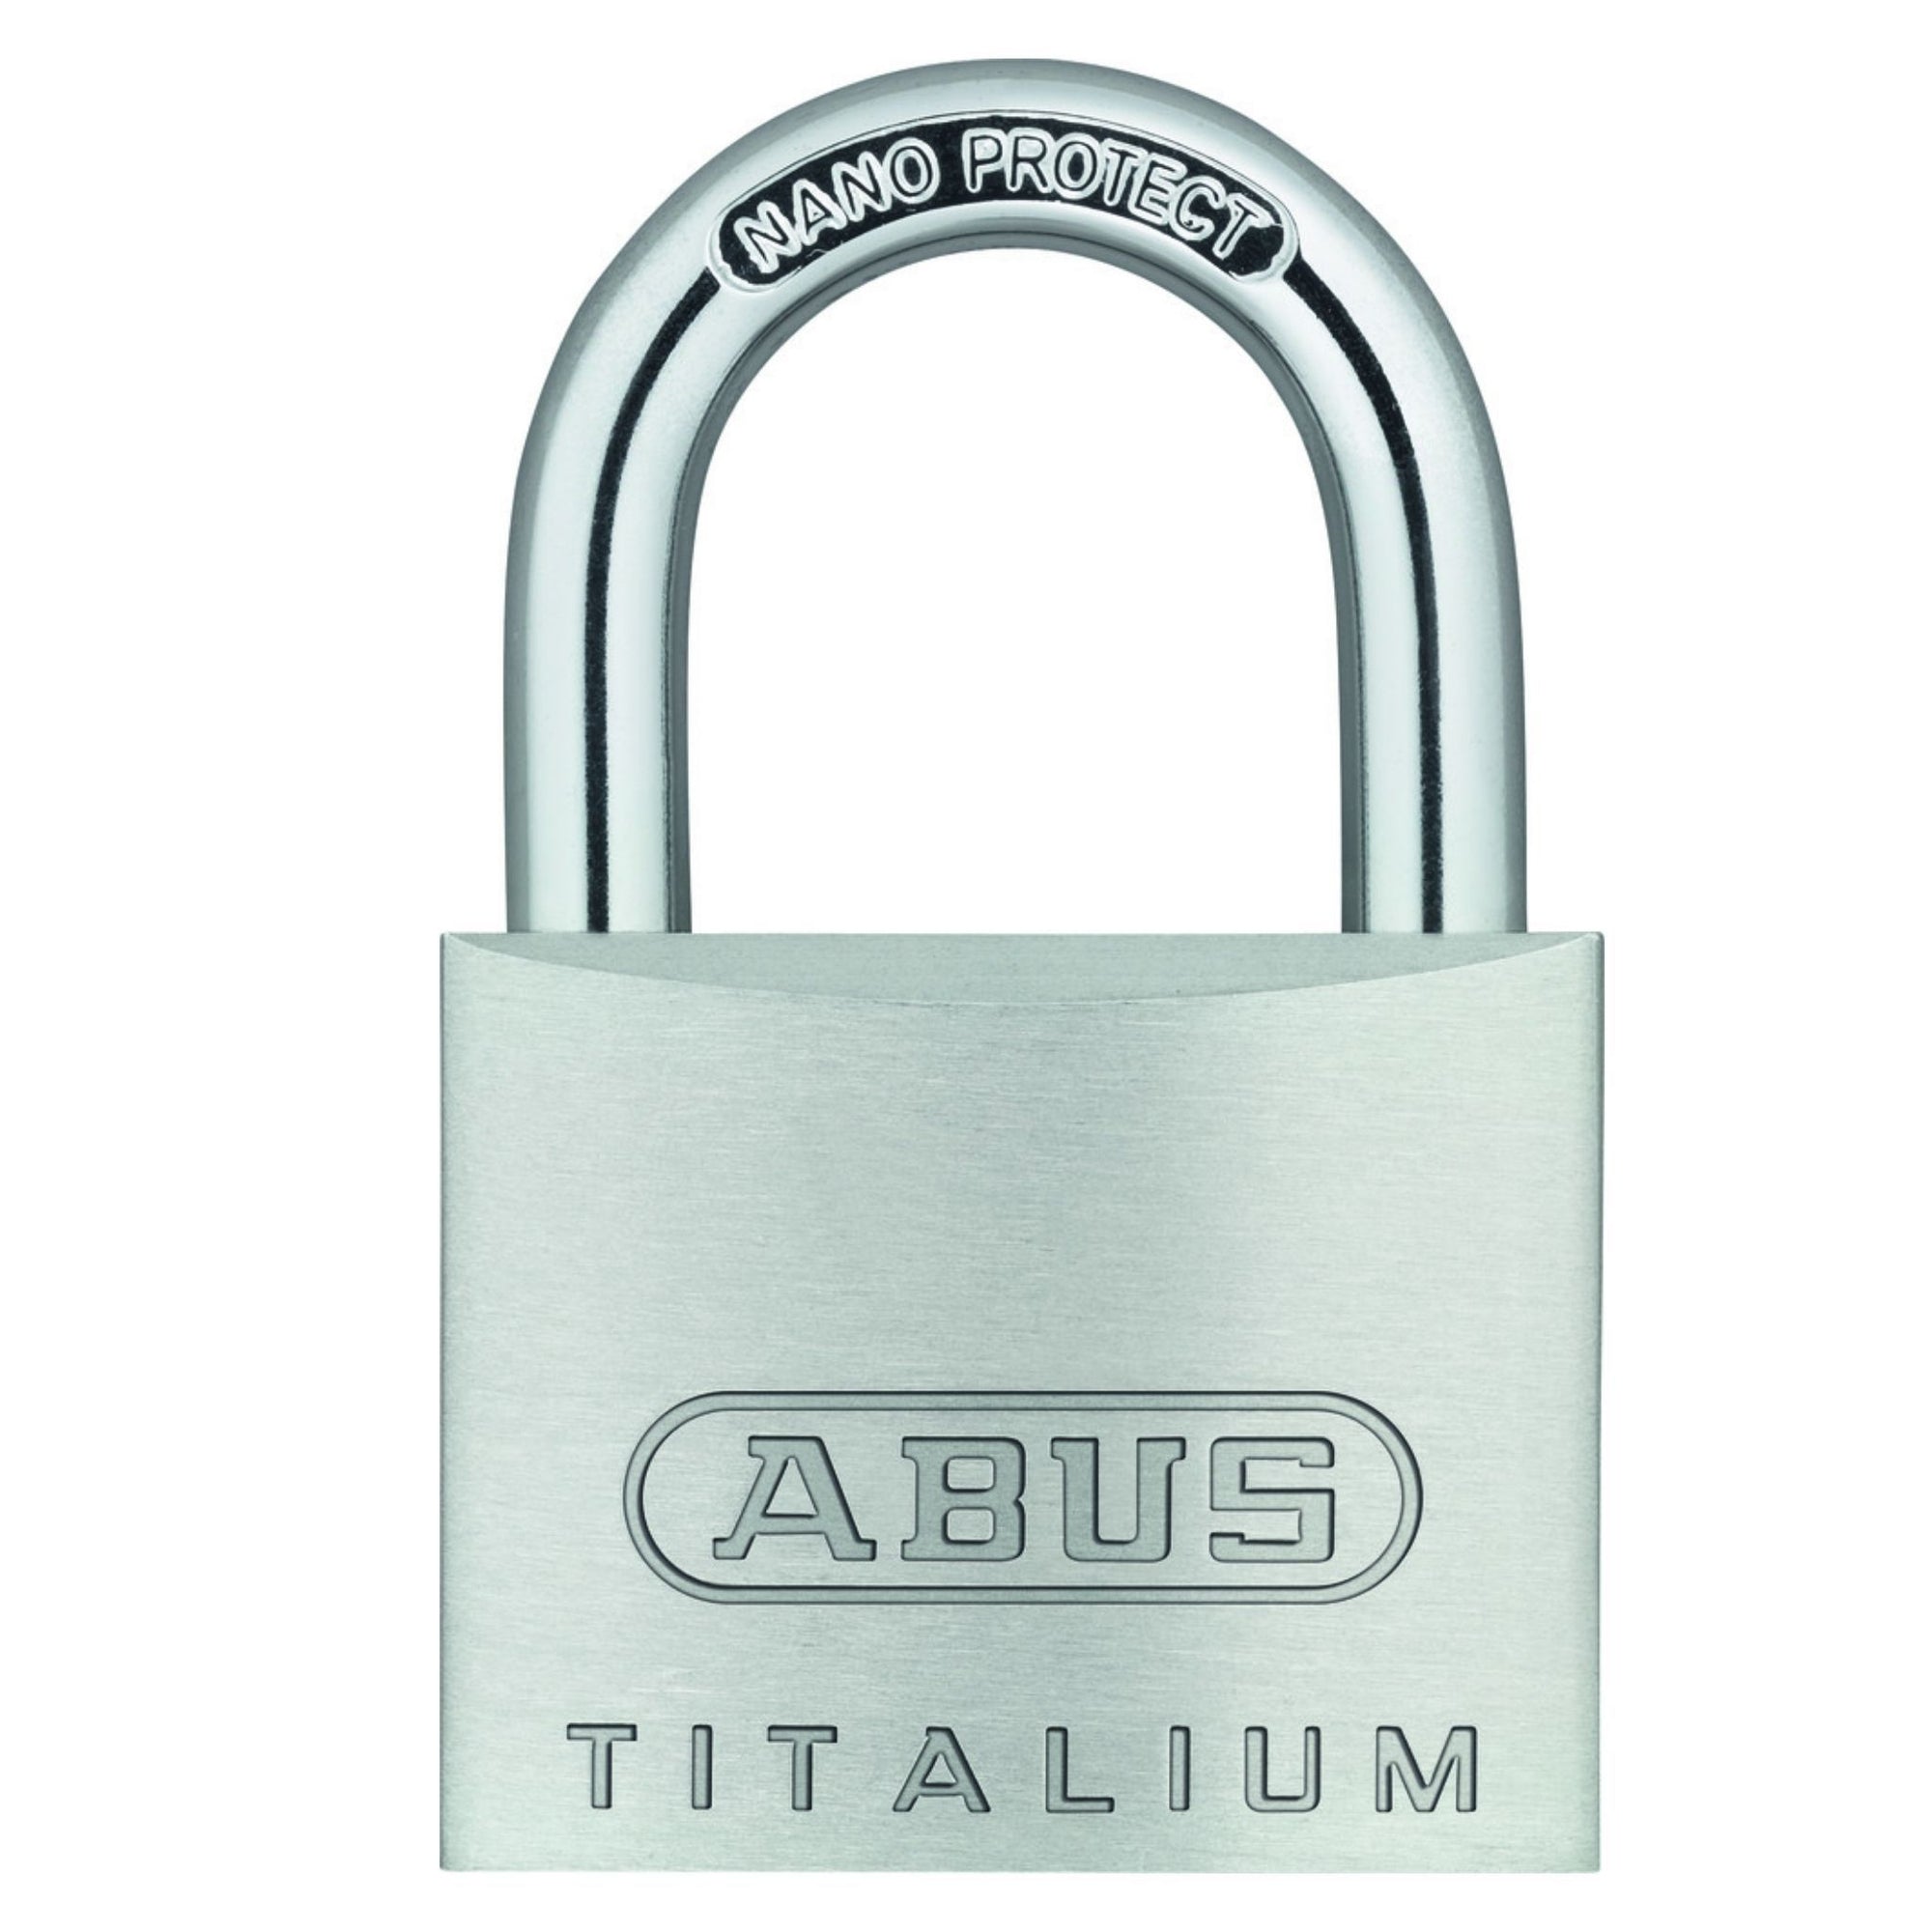 Abus 64TI/40 KA 6411 Lock Keyed Alike Titalium Padlocks Matched to Existing Key Number KA6411 - The Lock Source